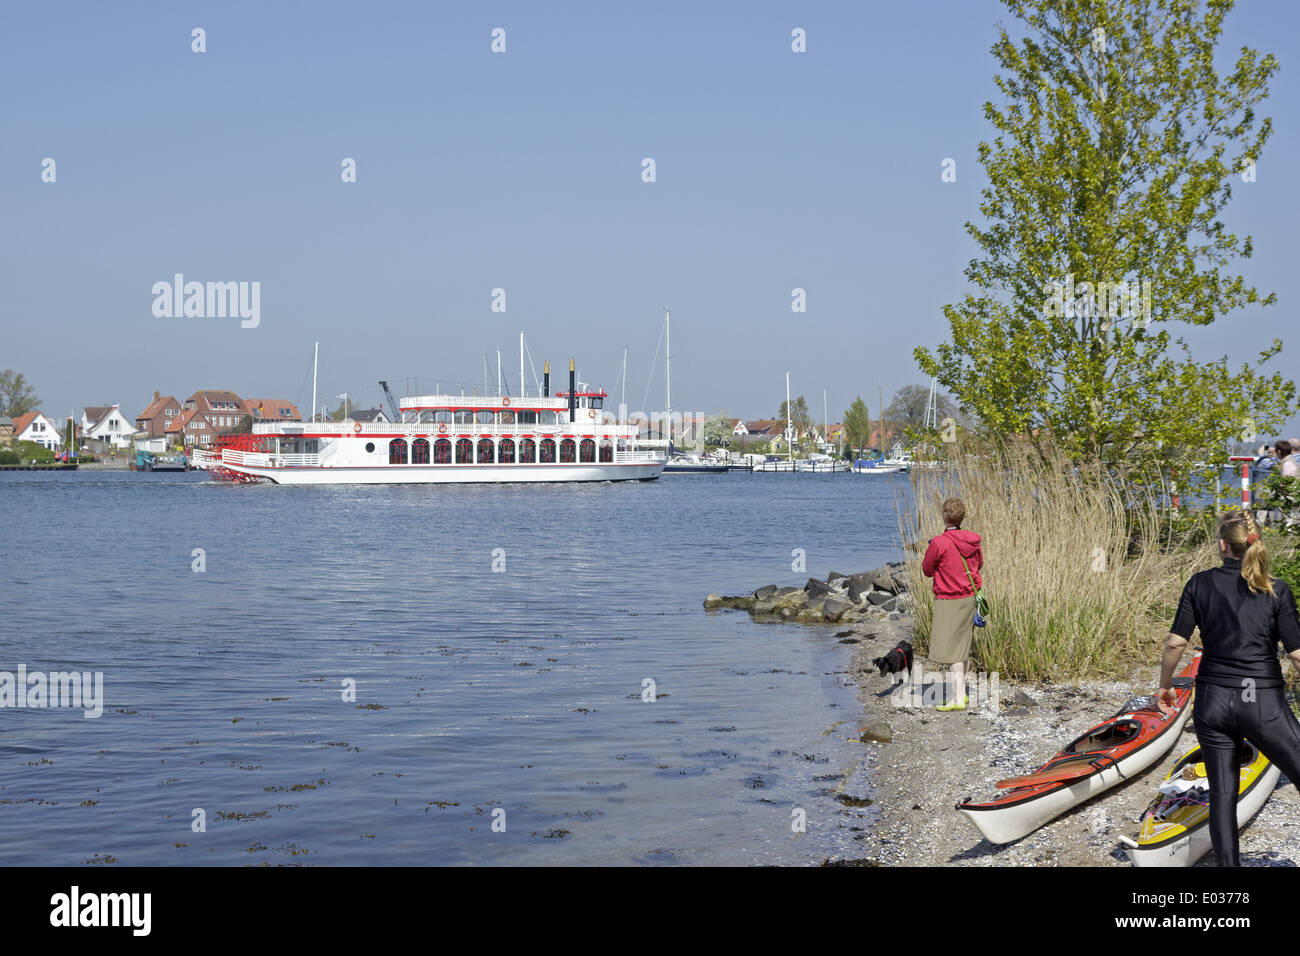 Le nouveau 'Princess' chlei paddlesteamer passant Arnis, mer Baltique Fjord Schlei, Schleswig-Holstein, Allemagne Banque D'Images